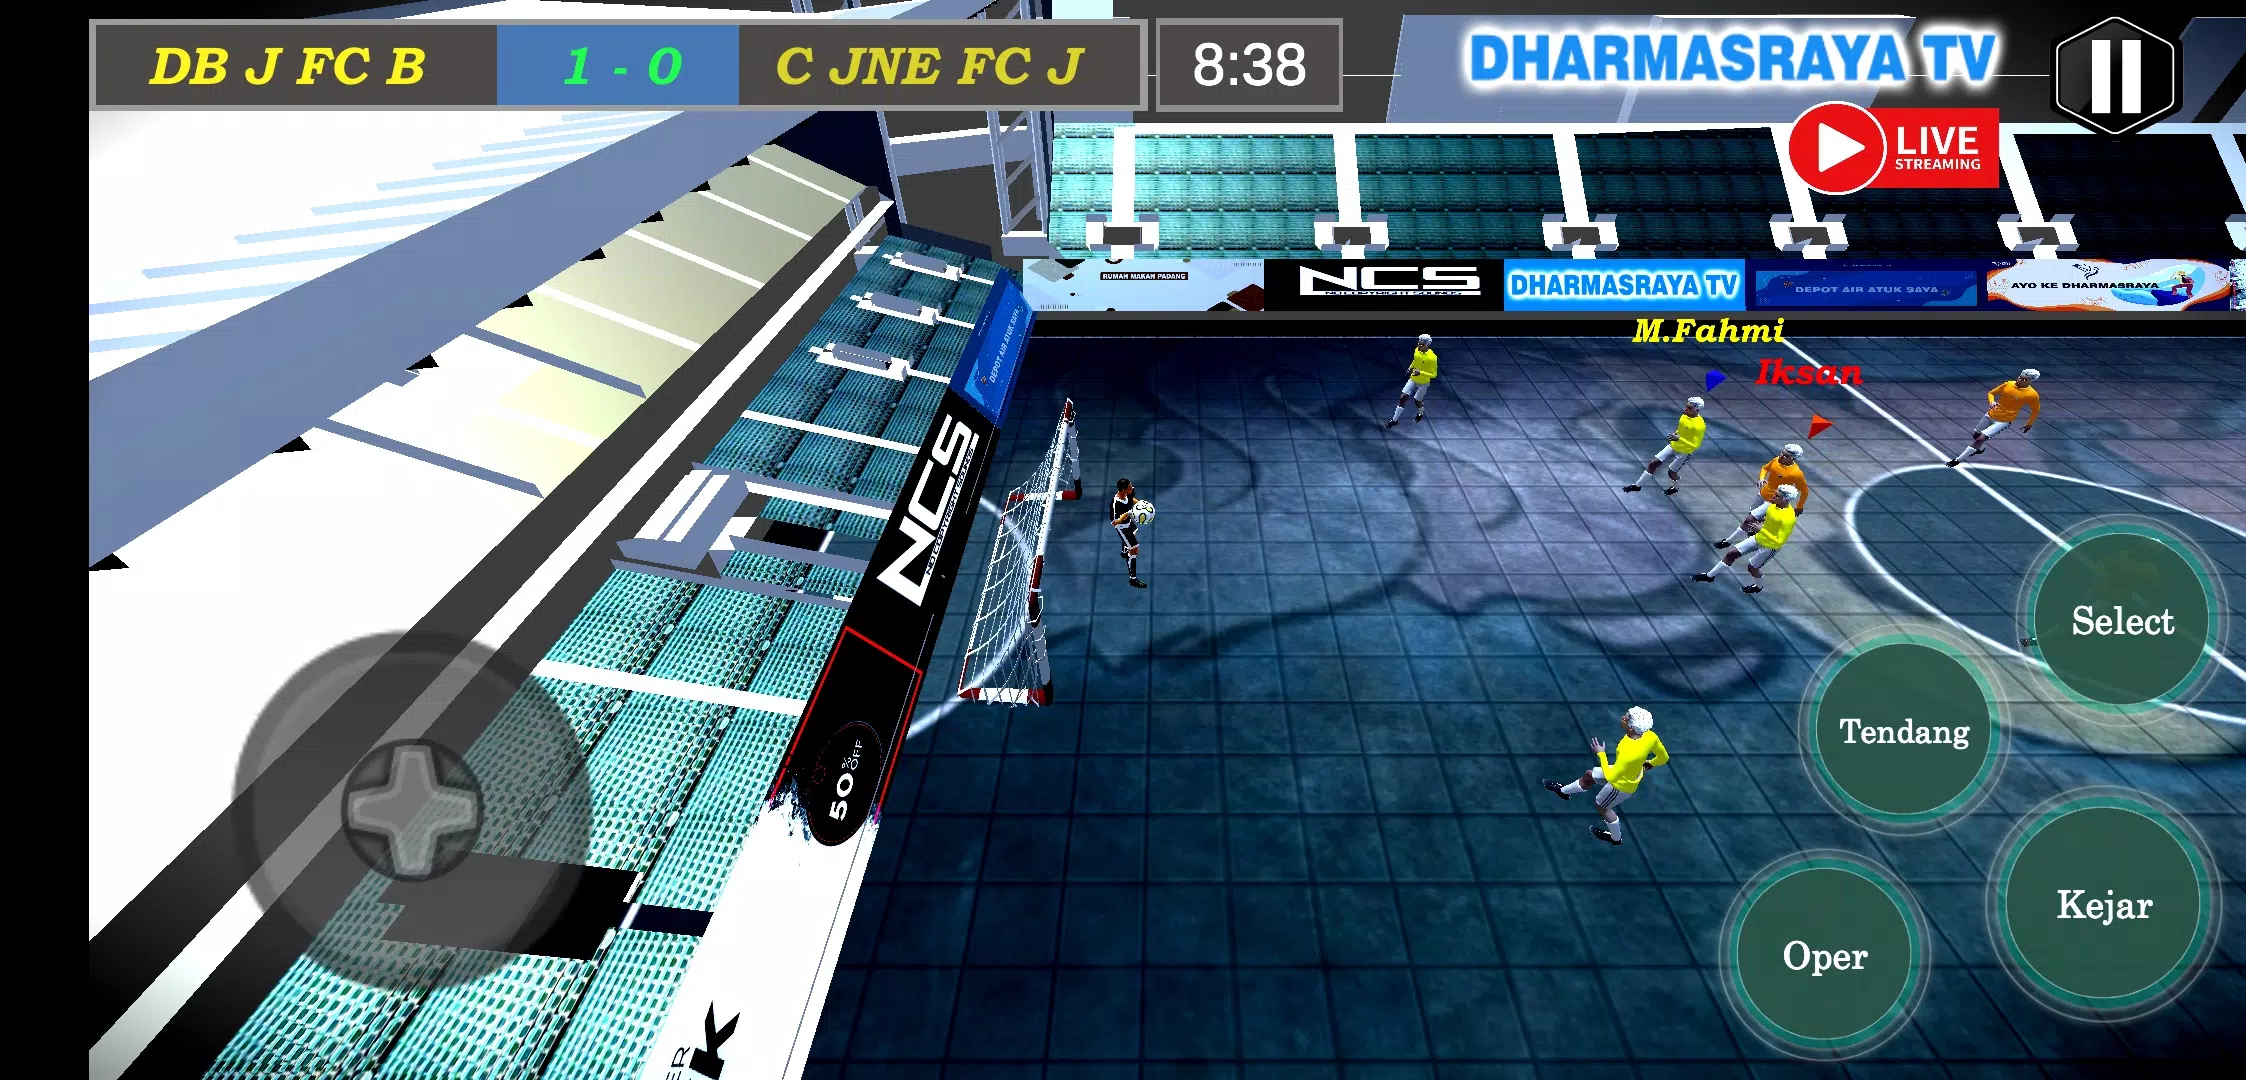 Download do APK de Regras do Futsal PRO para Android